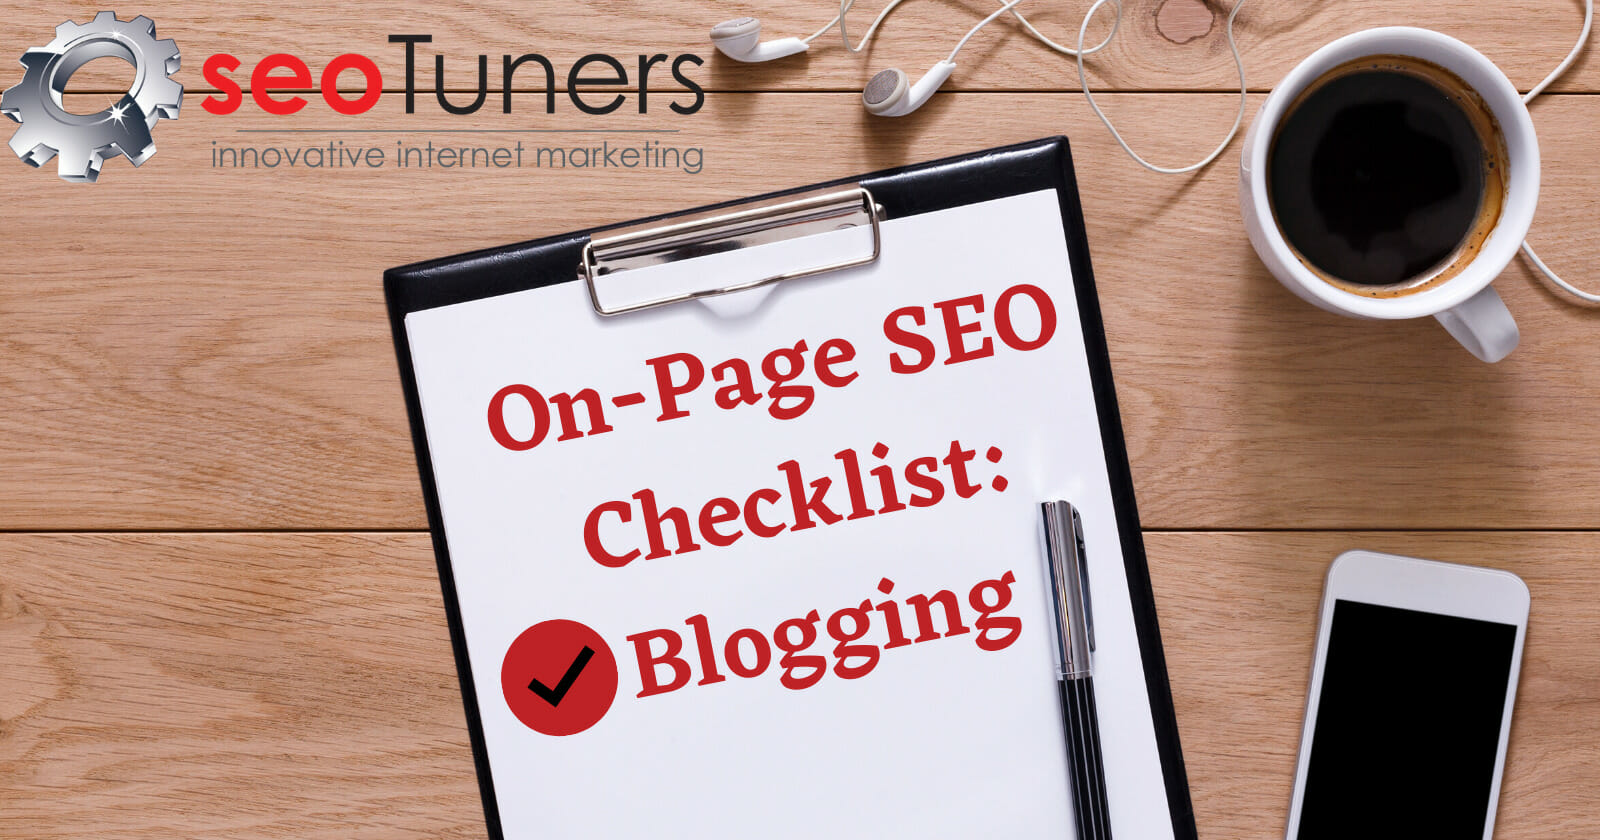 On-Page SEO Checklist: Blogging